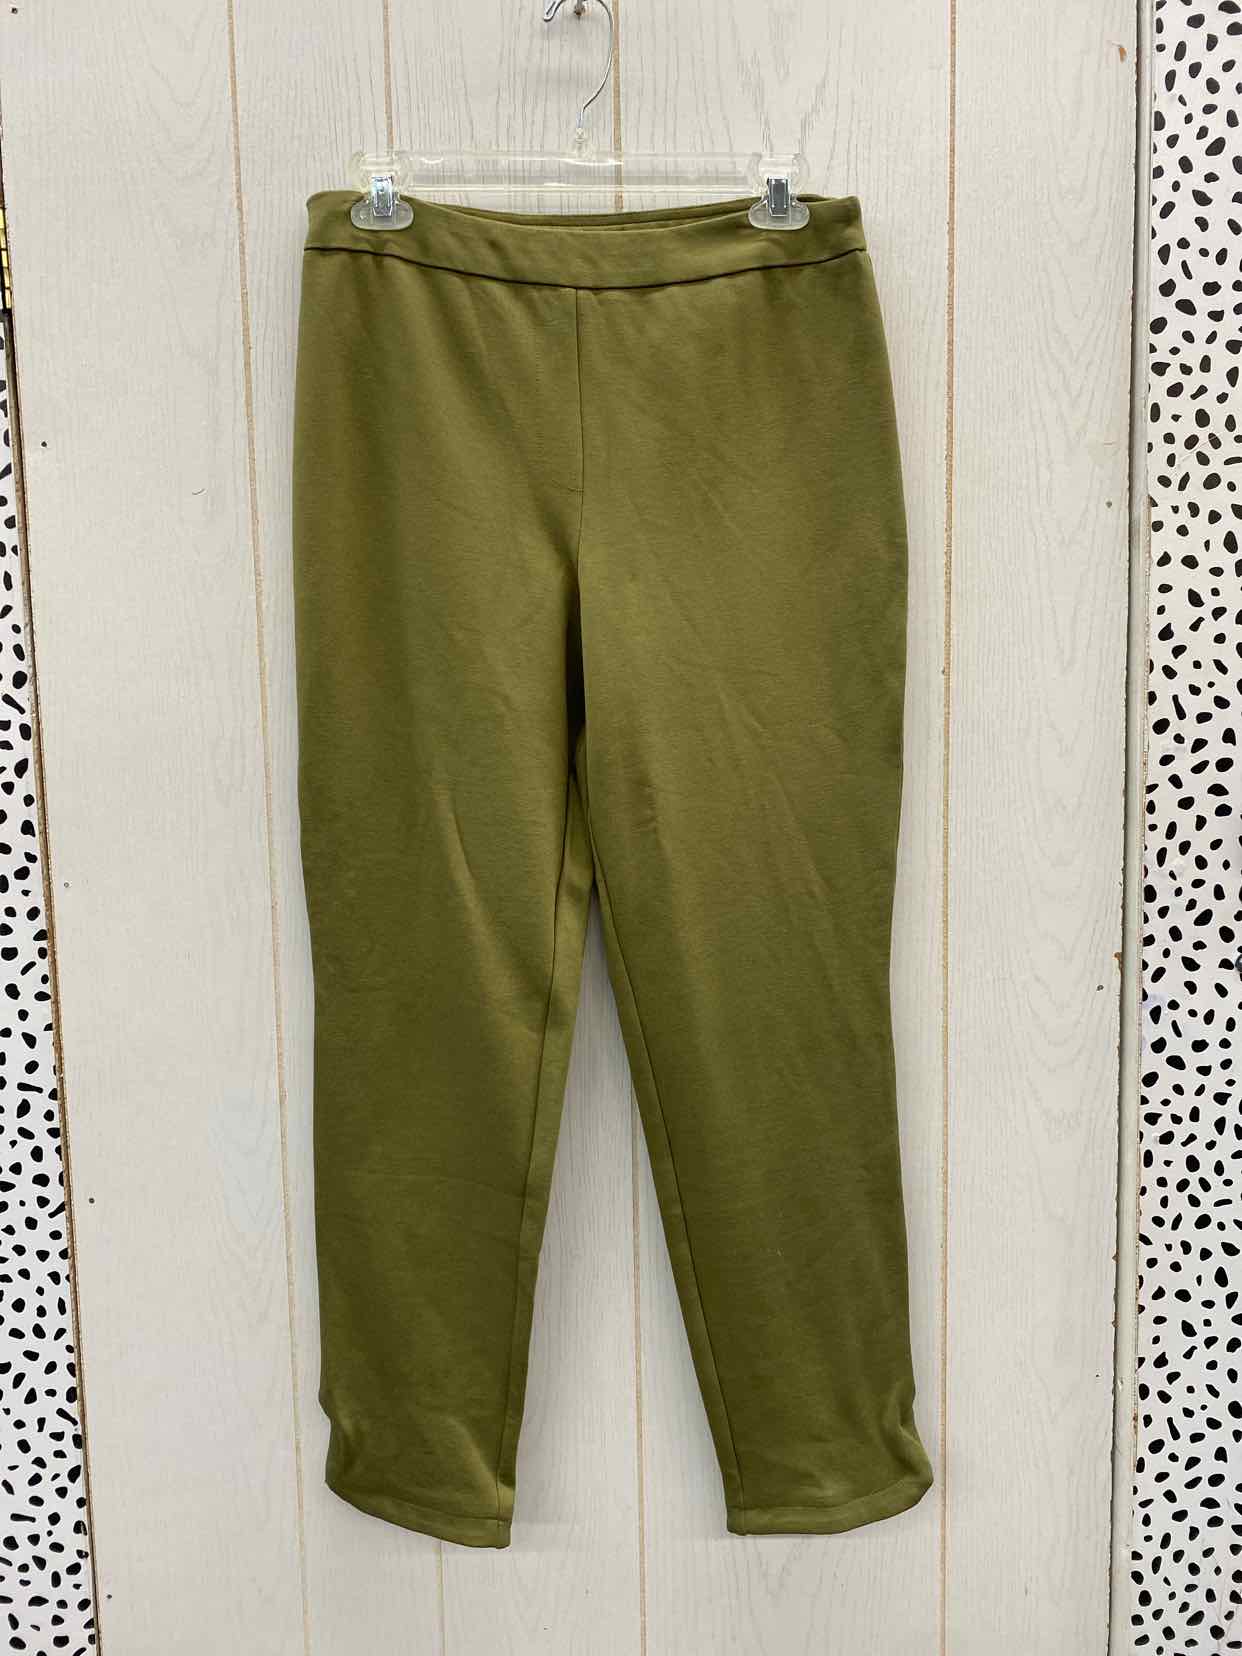 Joan Rivers Olive Womens Size 6/8 Pants